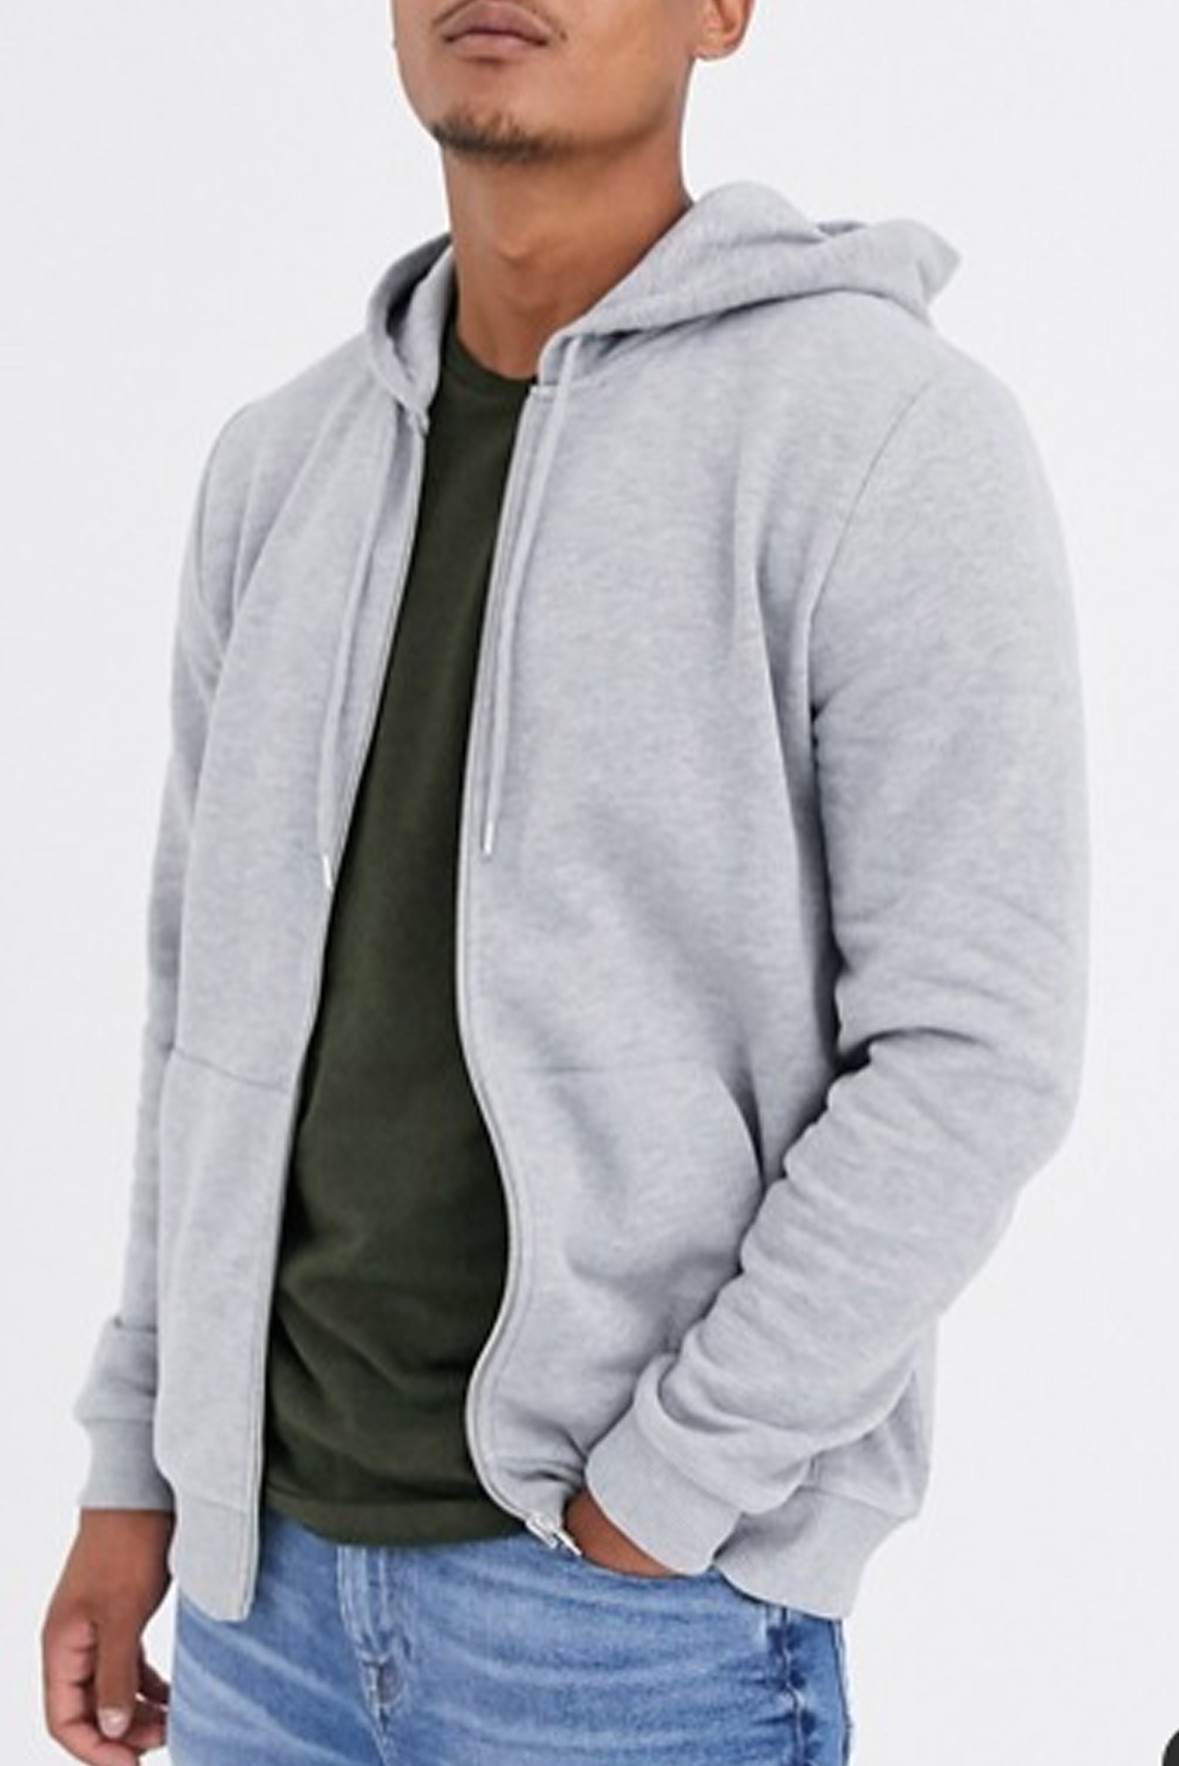 Zip up Grey hoodie